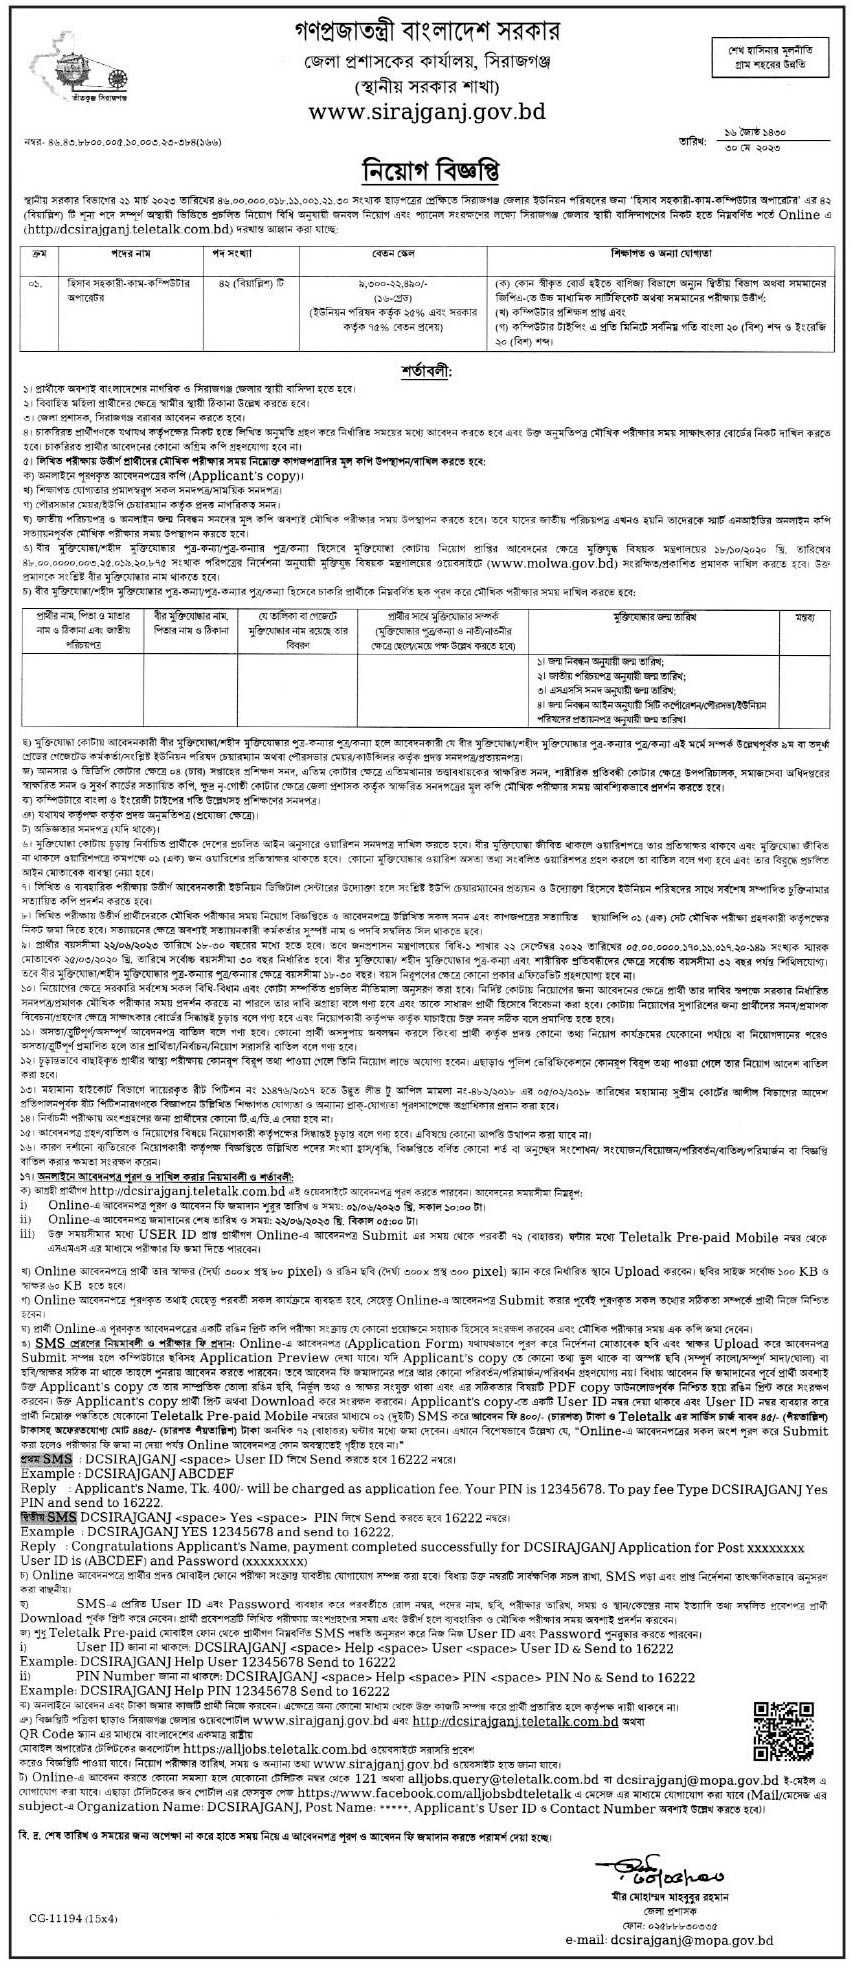 Sirajganj Jela Proshashok Job Circular 2023 - সিরাজগঞ্জ জেলা প্রশাসকের কার্যালয়ে নিয়োগ বিজ্ঞপ্তি ২০২৩ - জেলা প্রশাসকের কার্যালয়ে নিয়োগ বিজ্ঞপ্তি ২০২৩ - District Commissioner Office Job Circular 2023 - Job Circular 2023